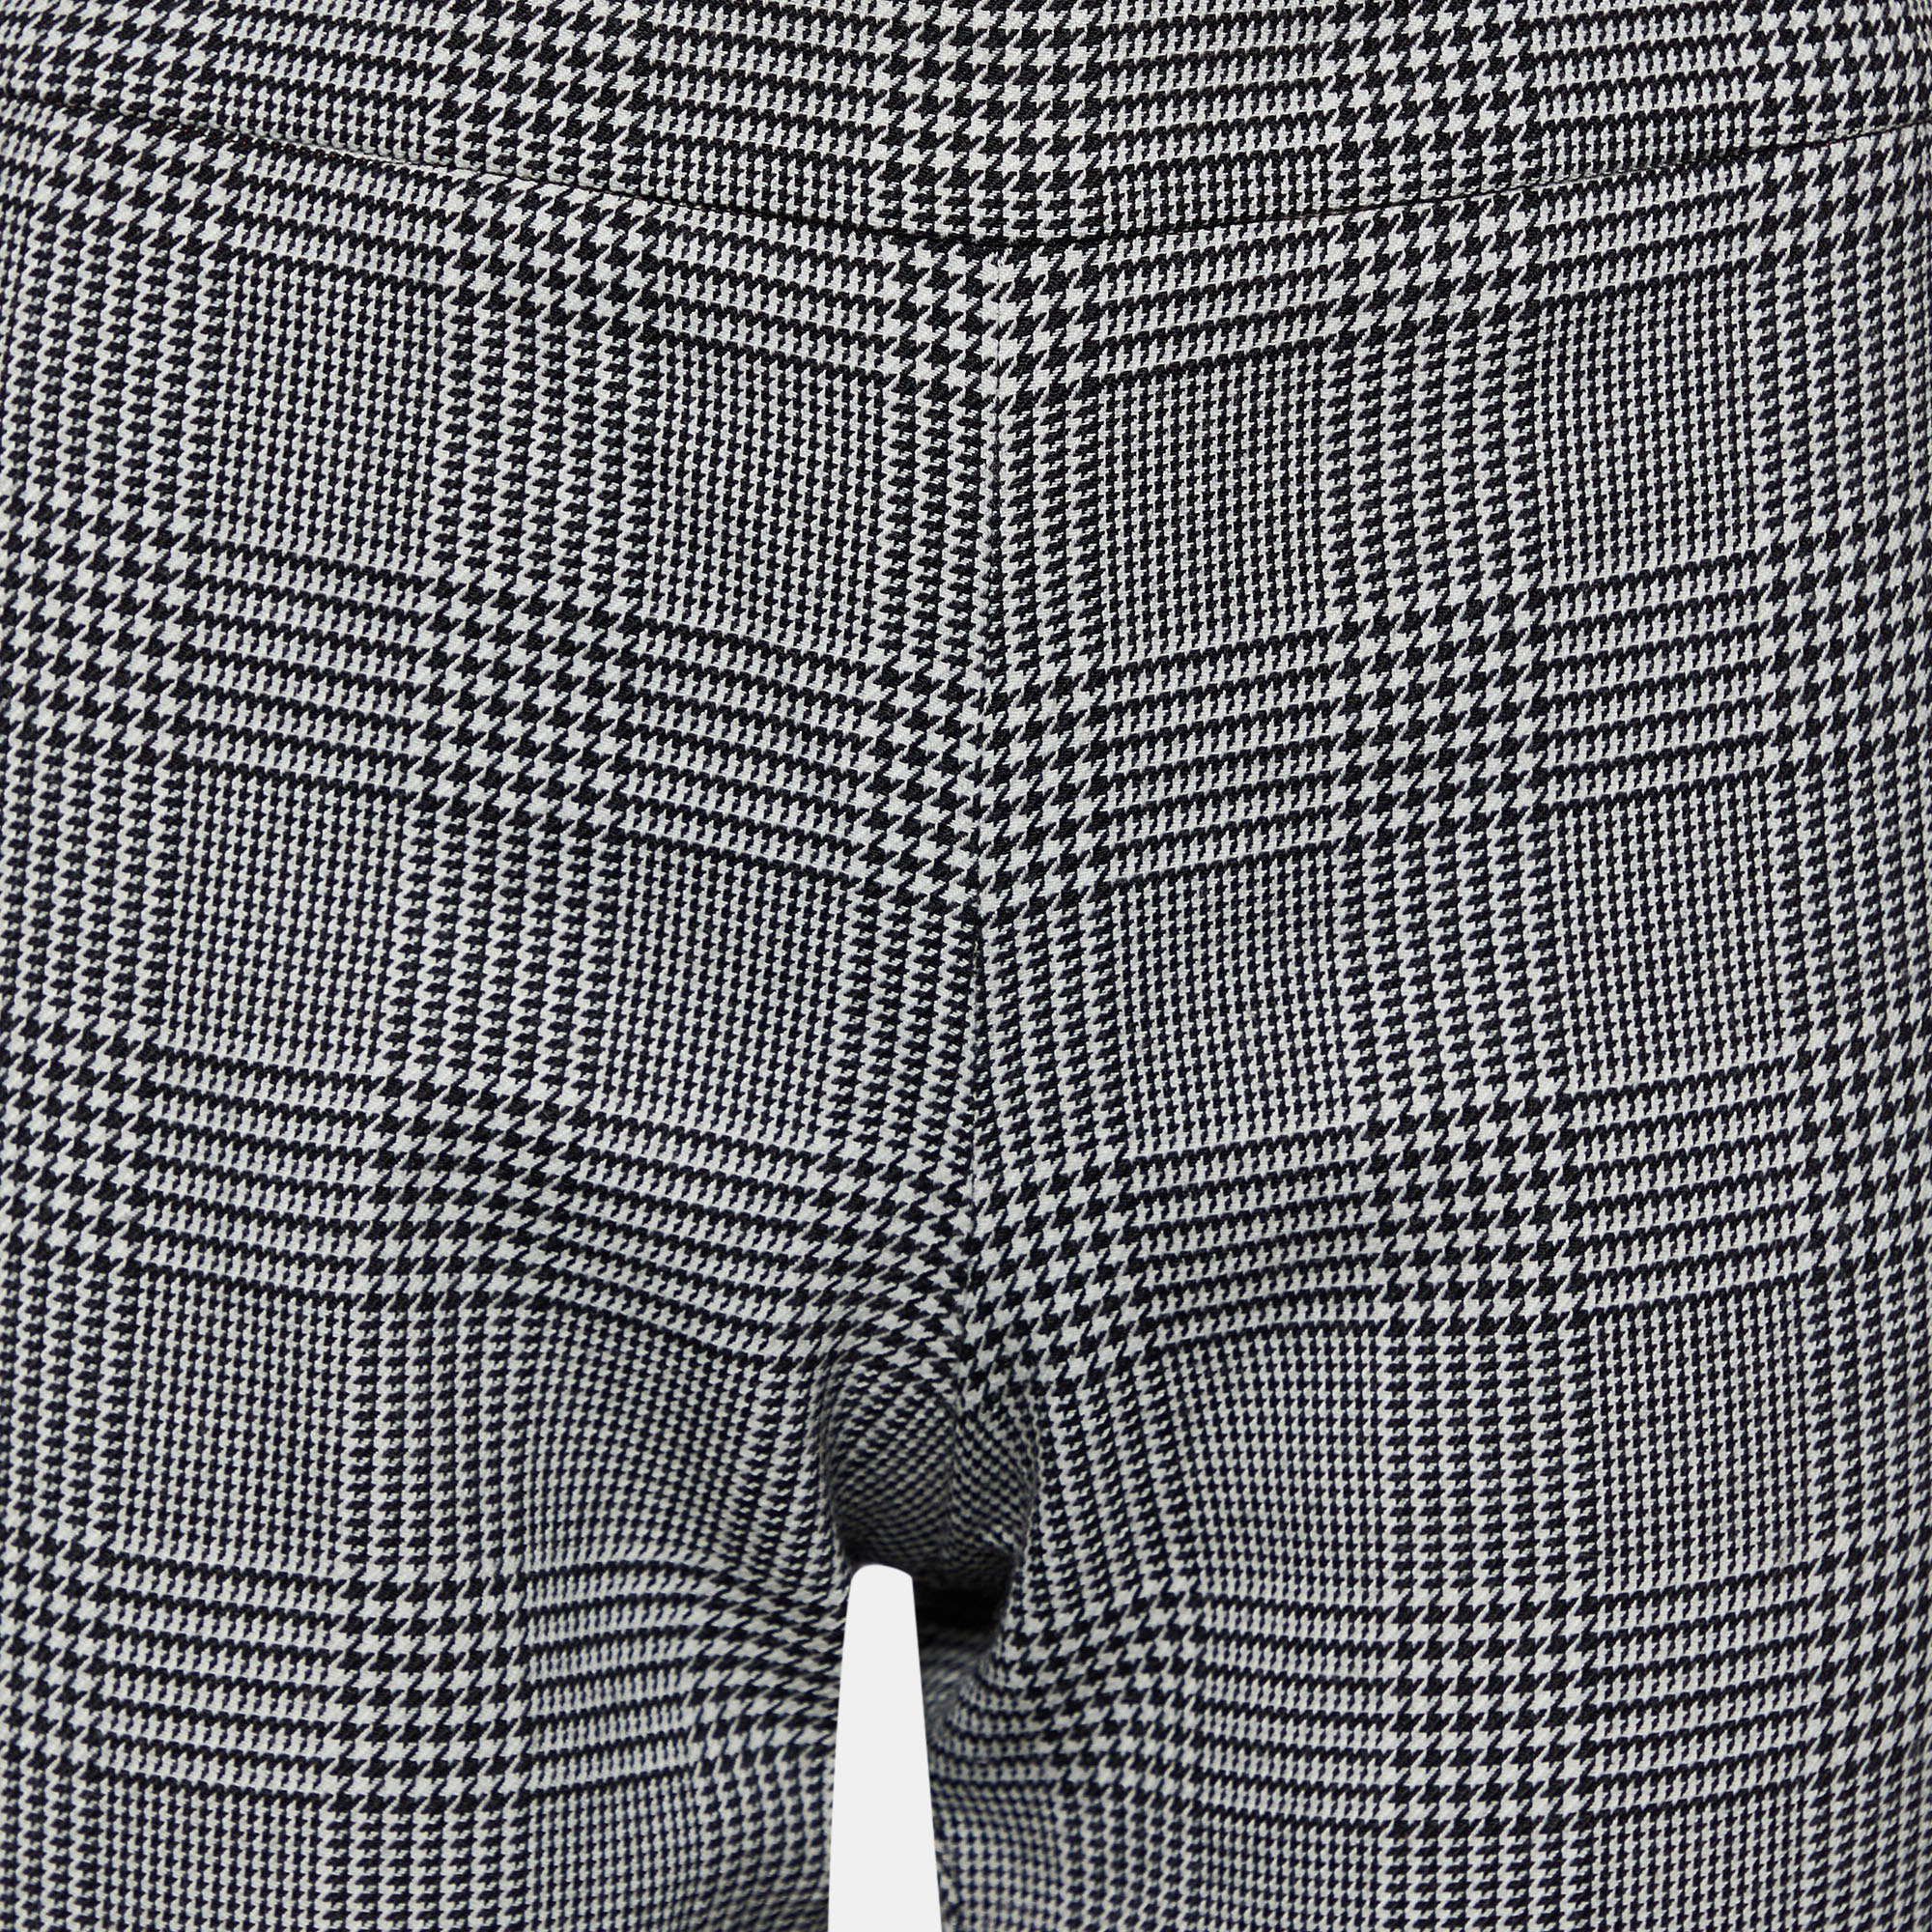 Emporio Armani Black Houndstooth Pattern Wool & Cotton Pants M